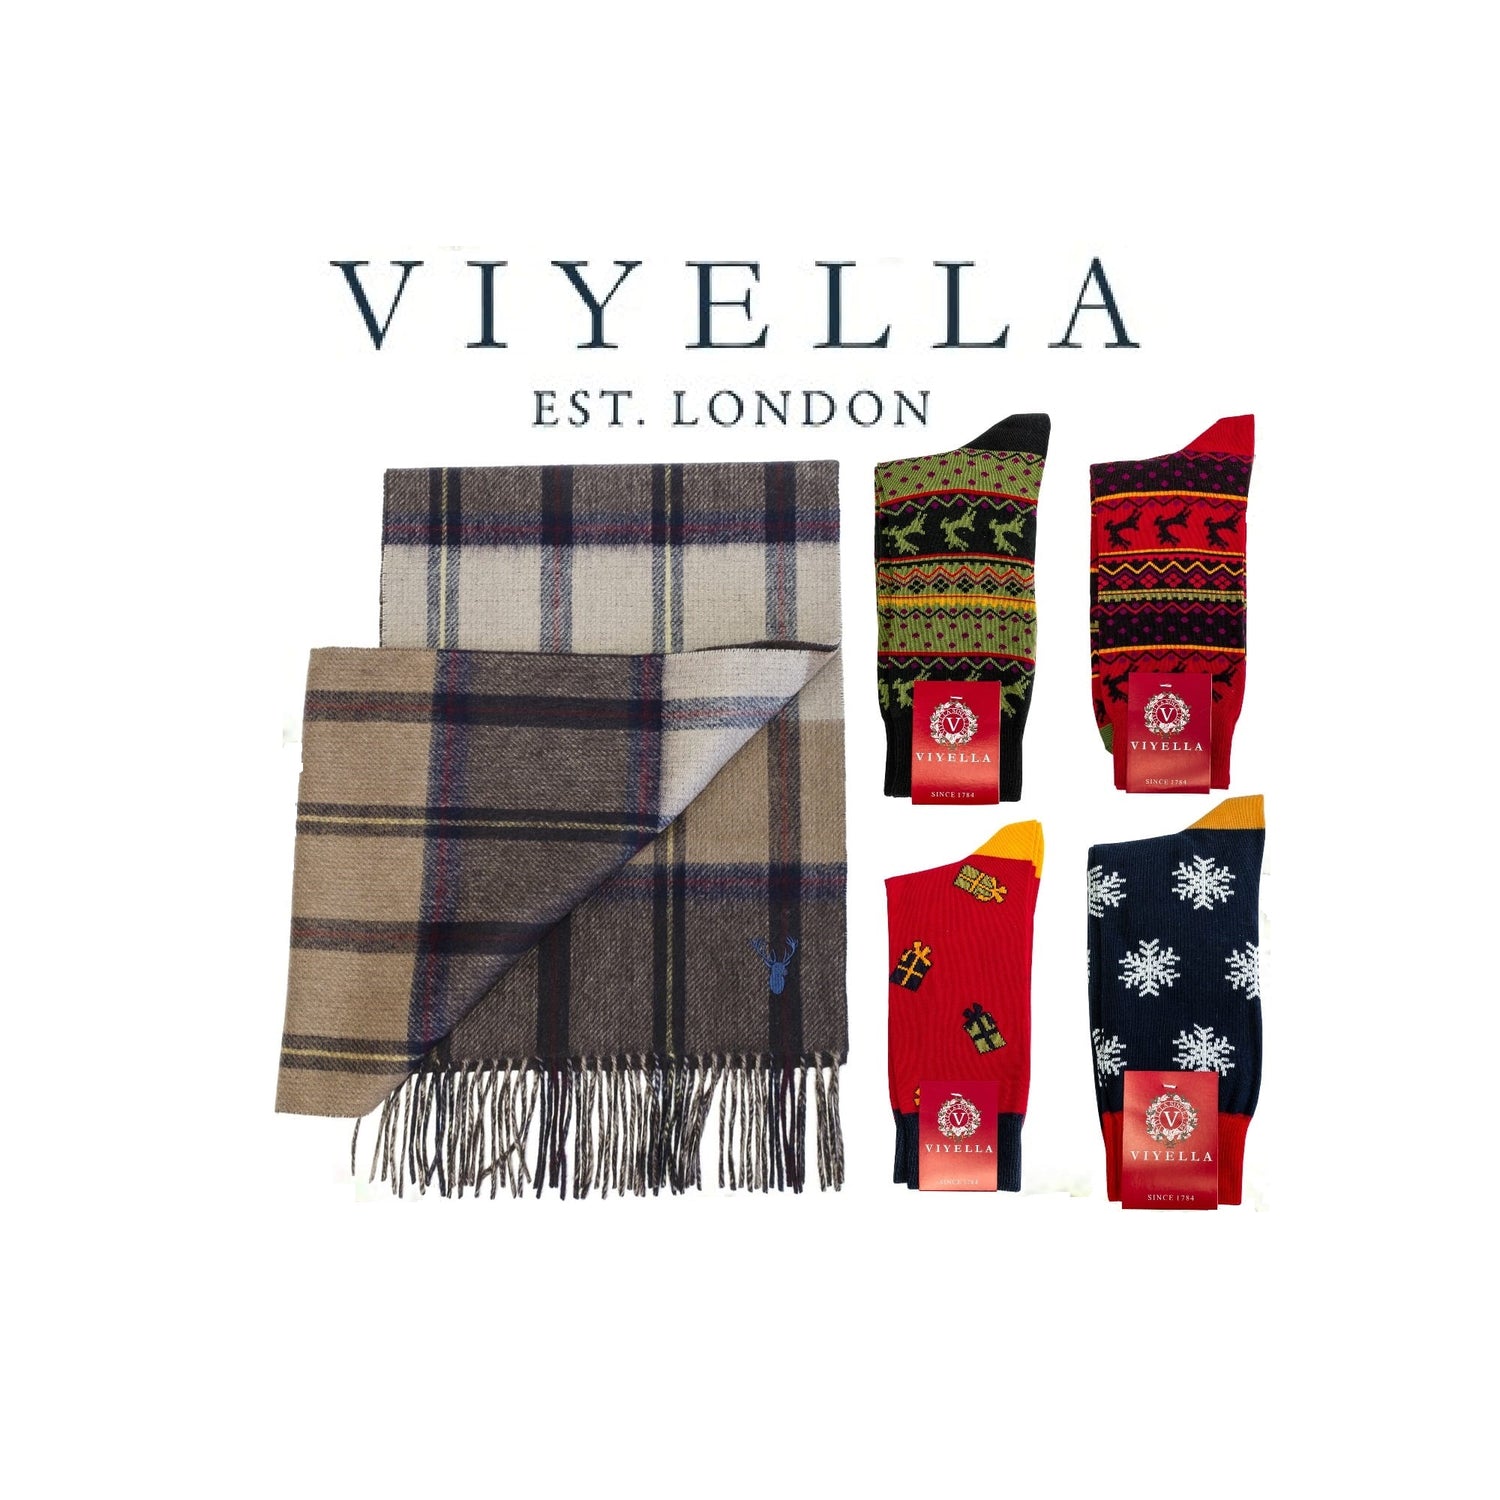 Viyella Socks and Scarves